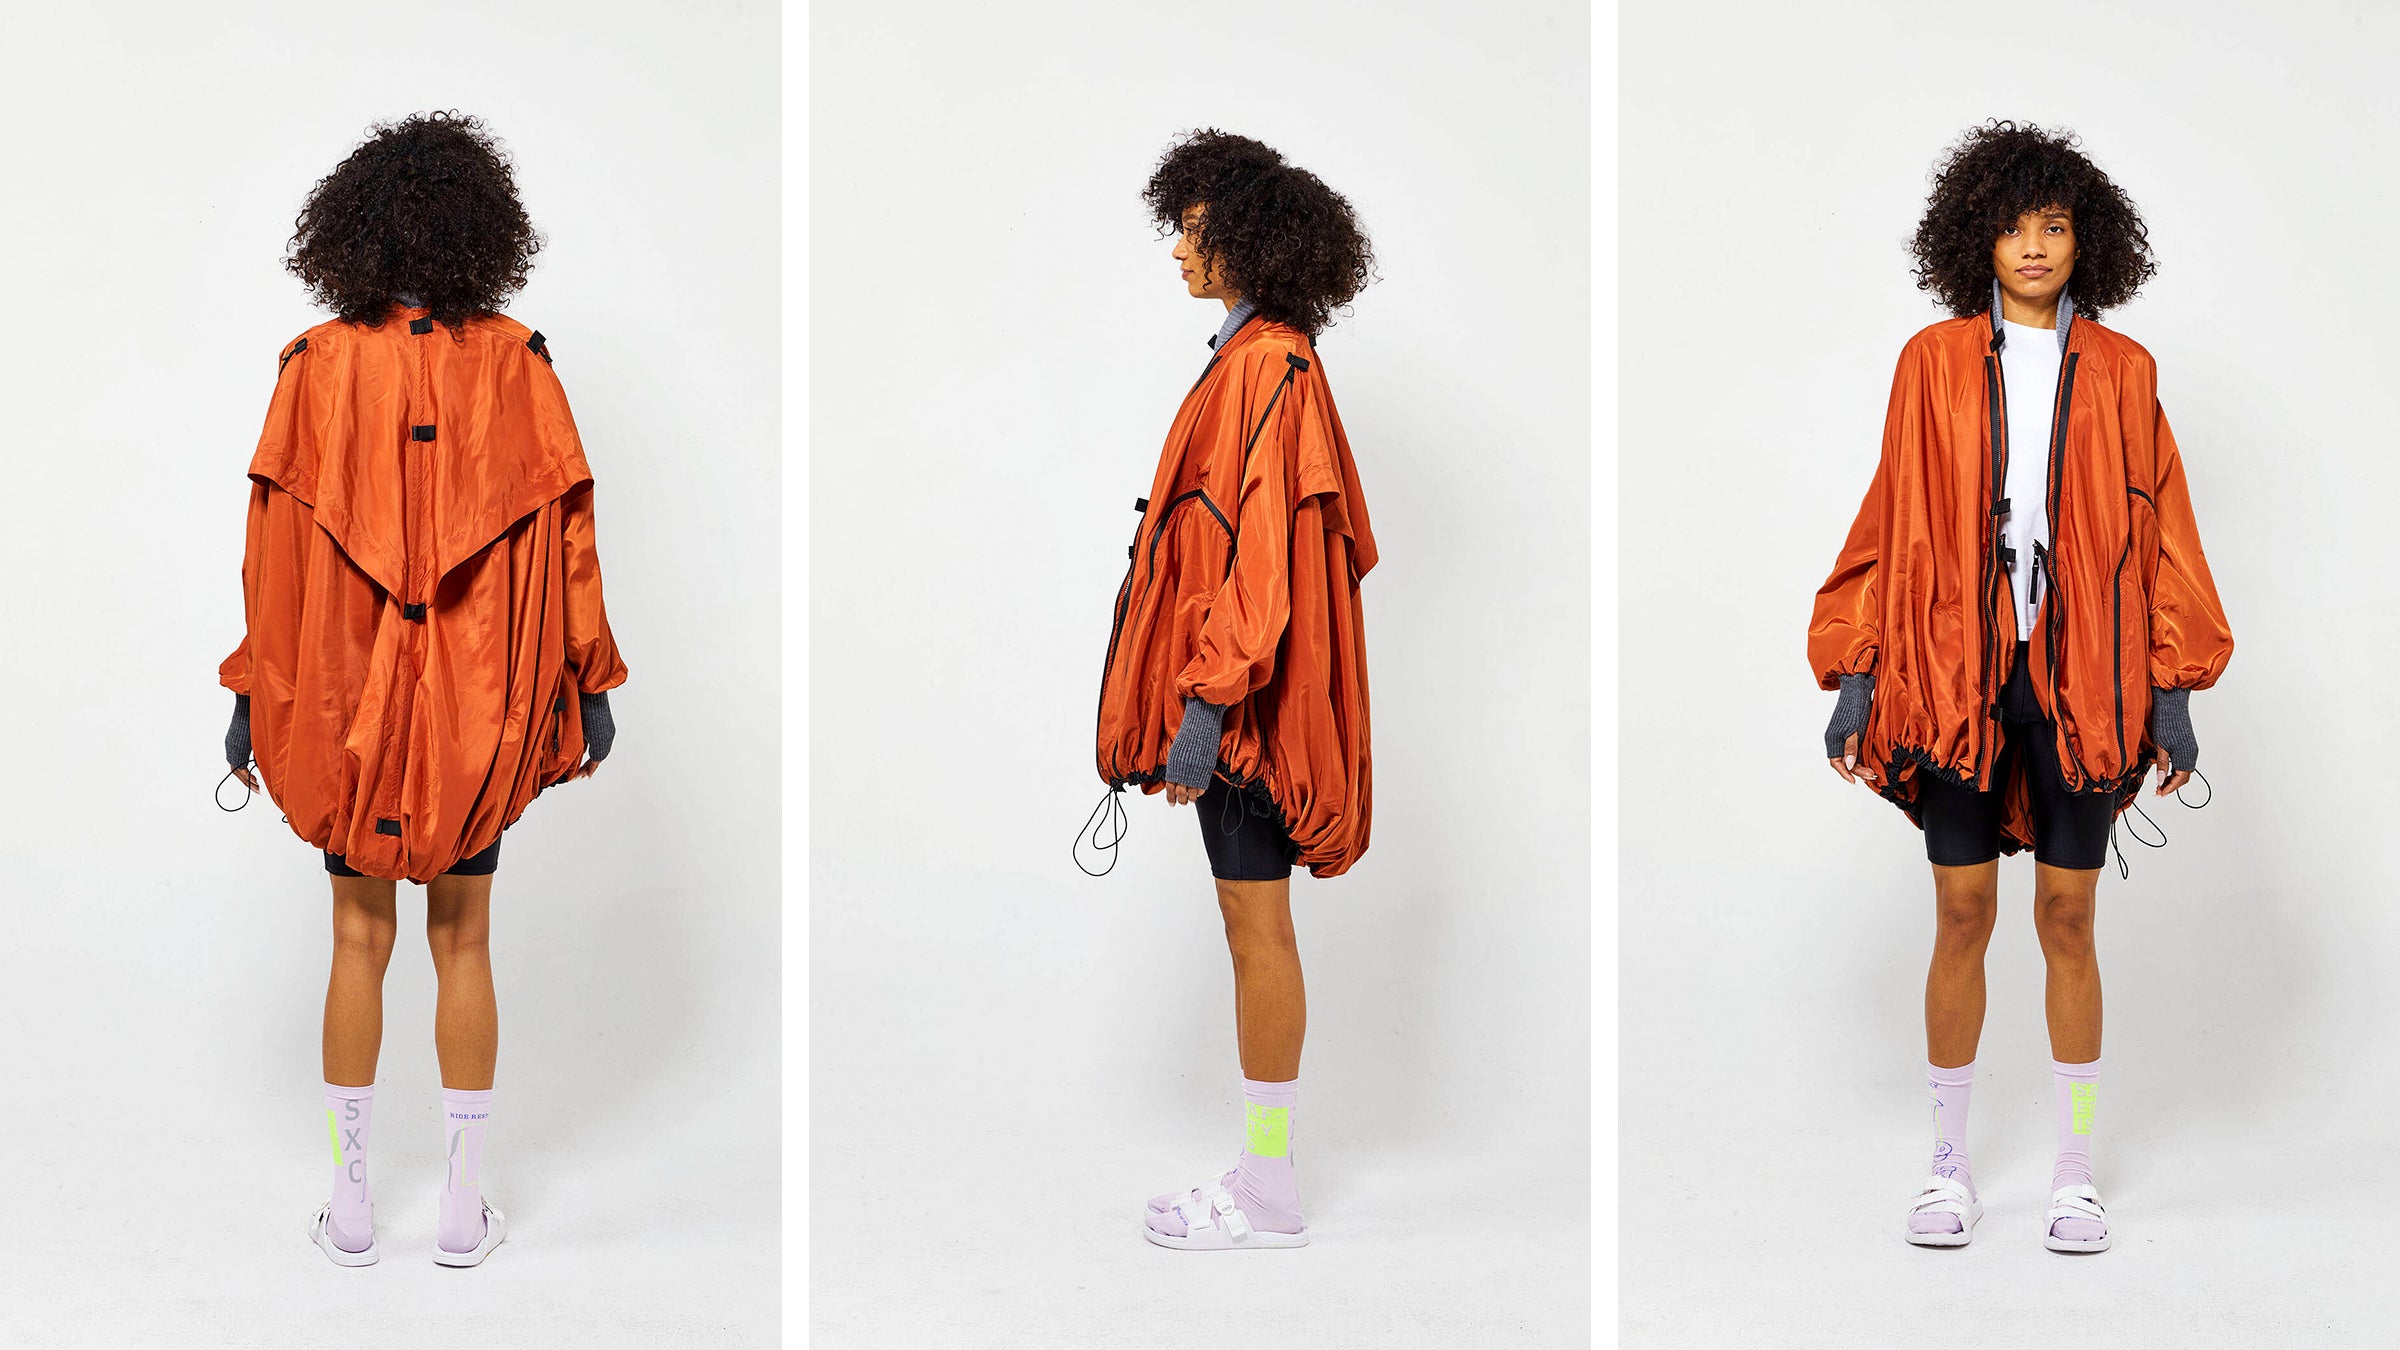 Celine - Celine - Red Mini Backpack on Designer Wardrobe